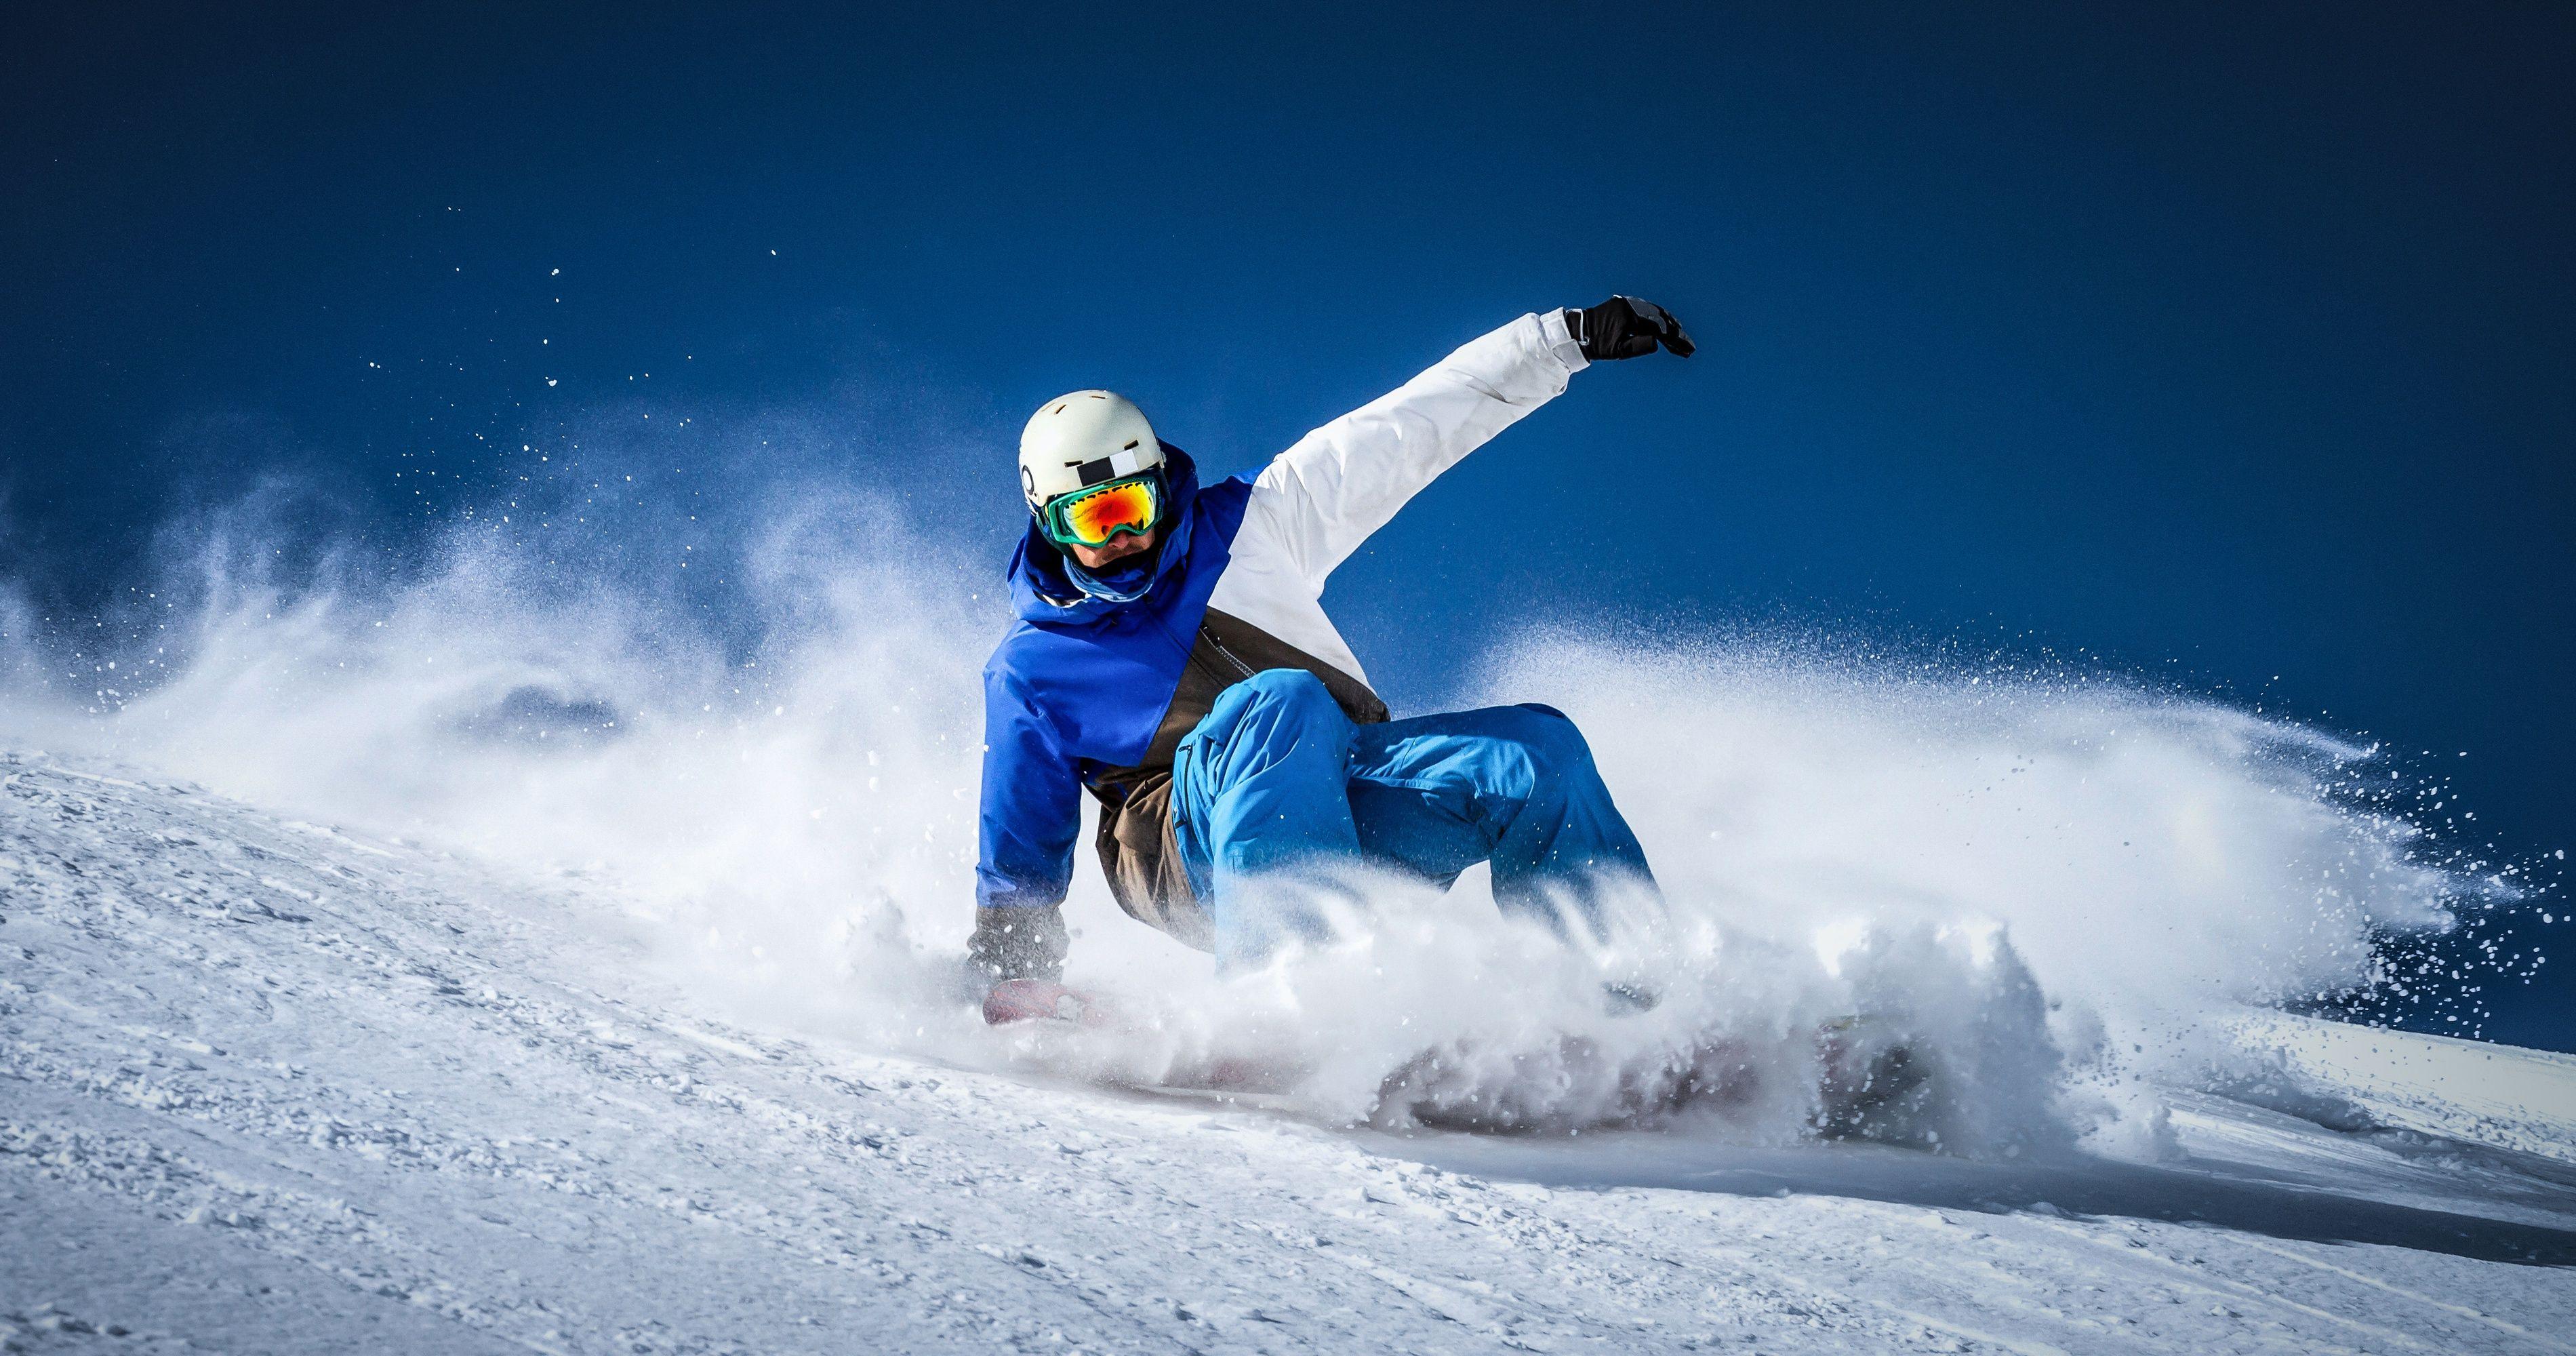 Snowboarding, HD Sports, 4k Wallpaper, Image, Background, Photo